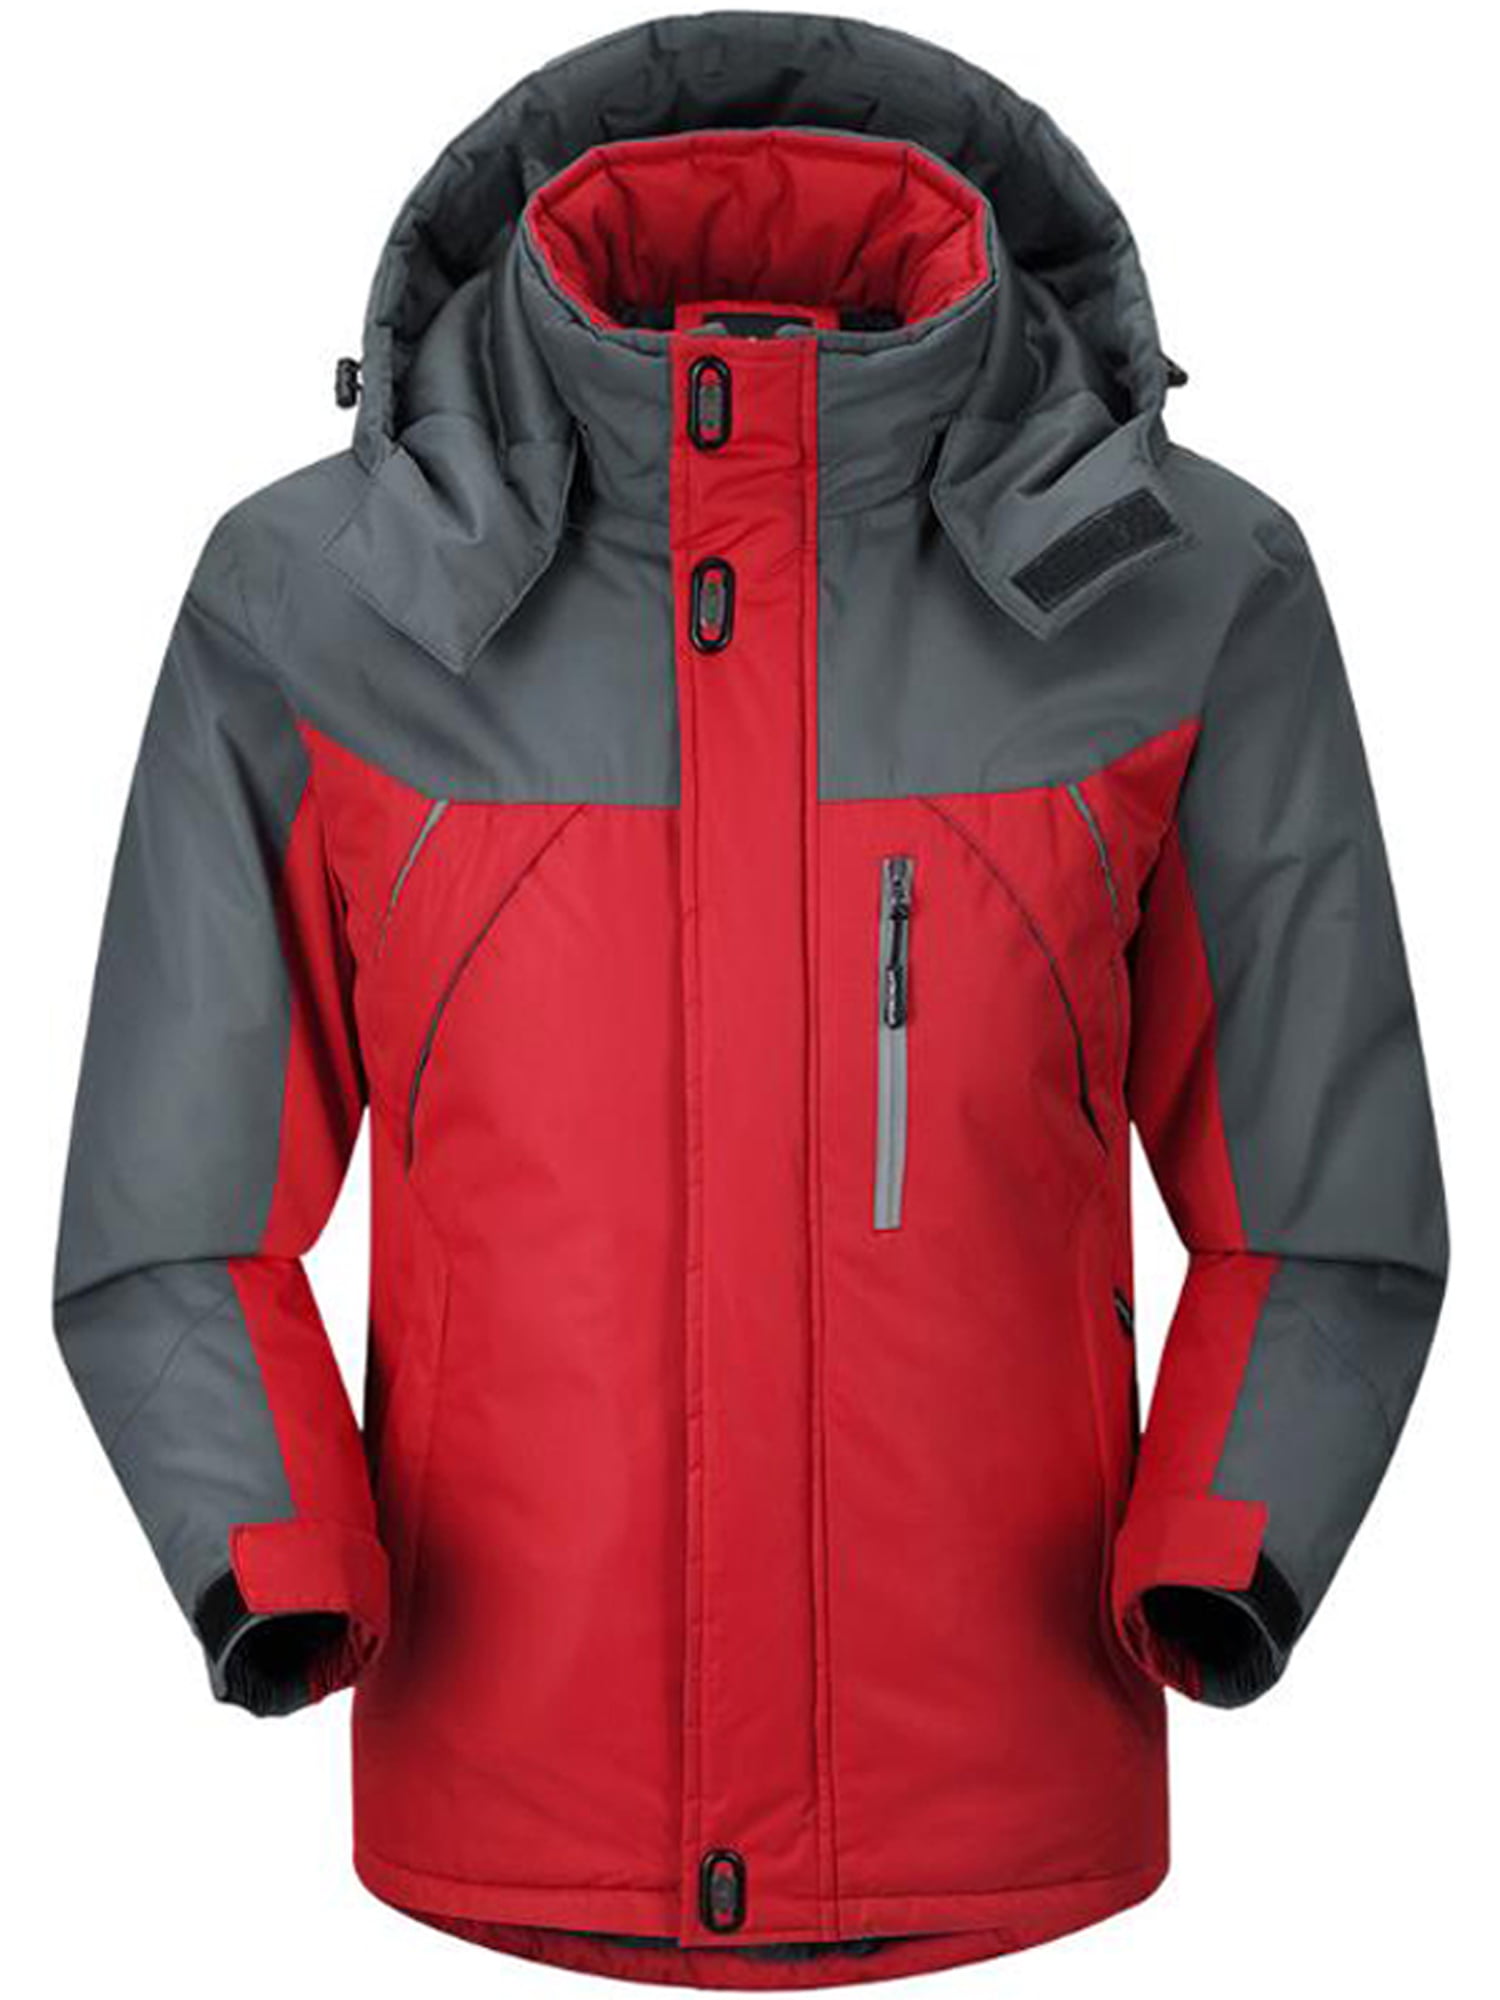 Details about   Men's Winter Warm Duck Down Jacket Ski Jacket Snow Hooded Coat Climbing Oversize 